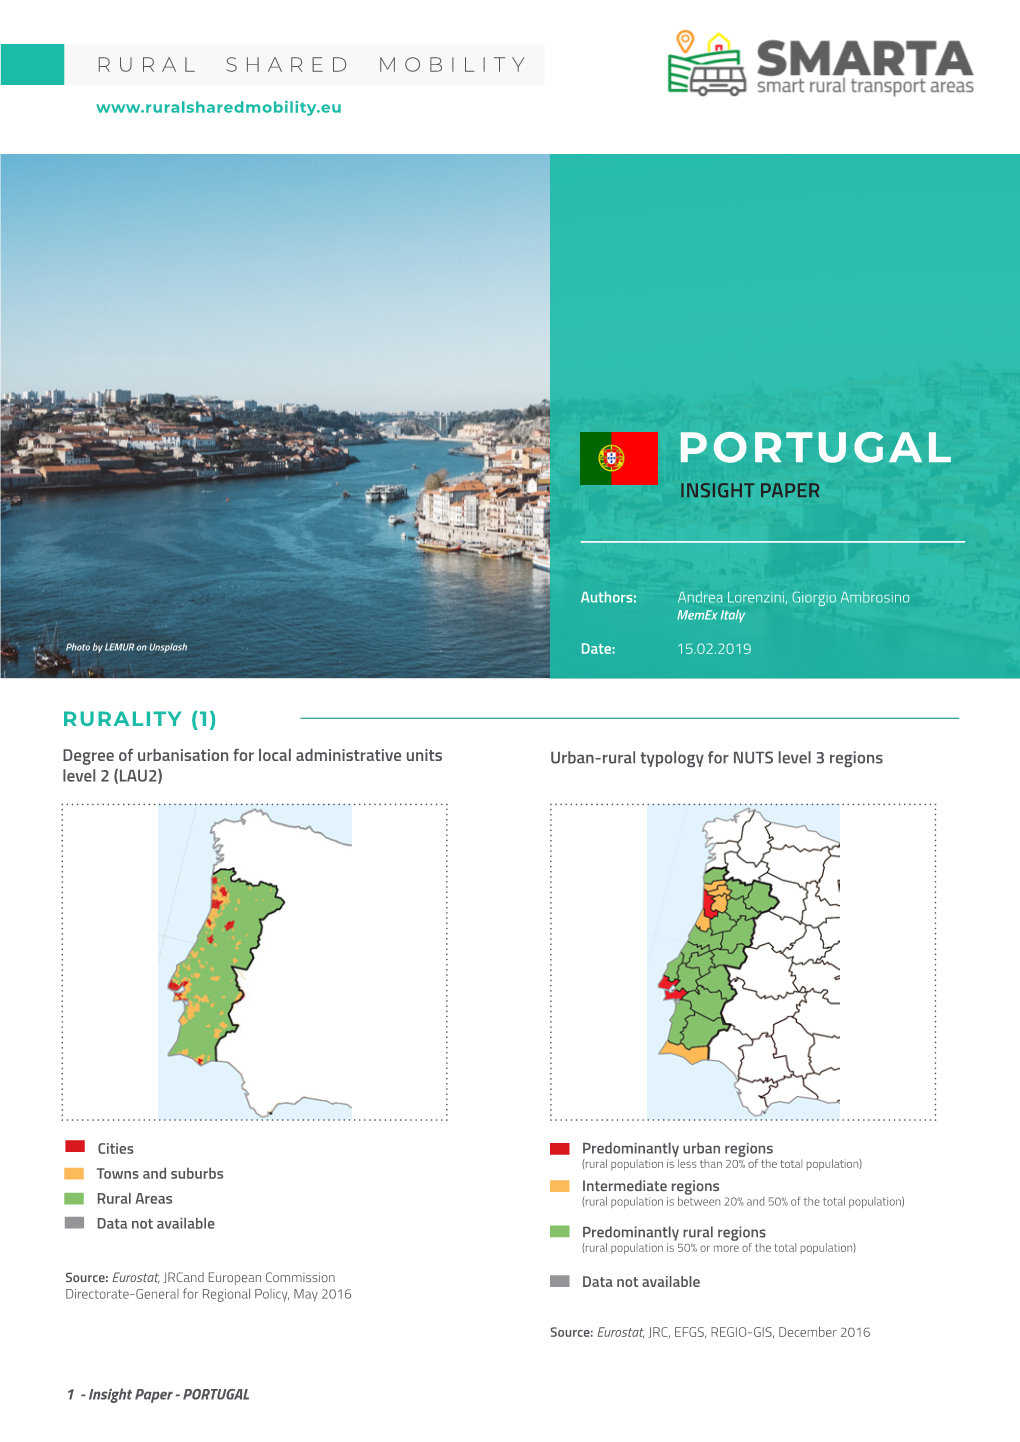 Portugal Insight Paper